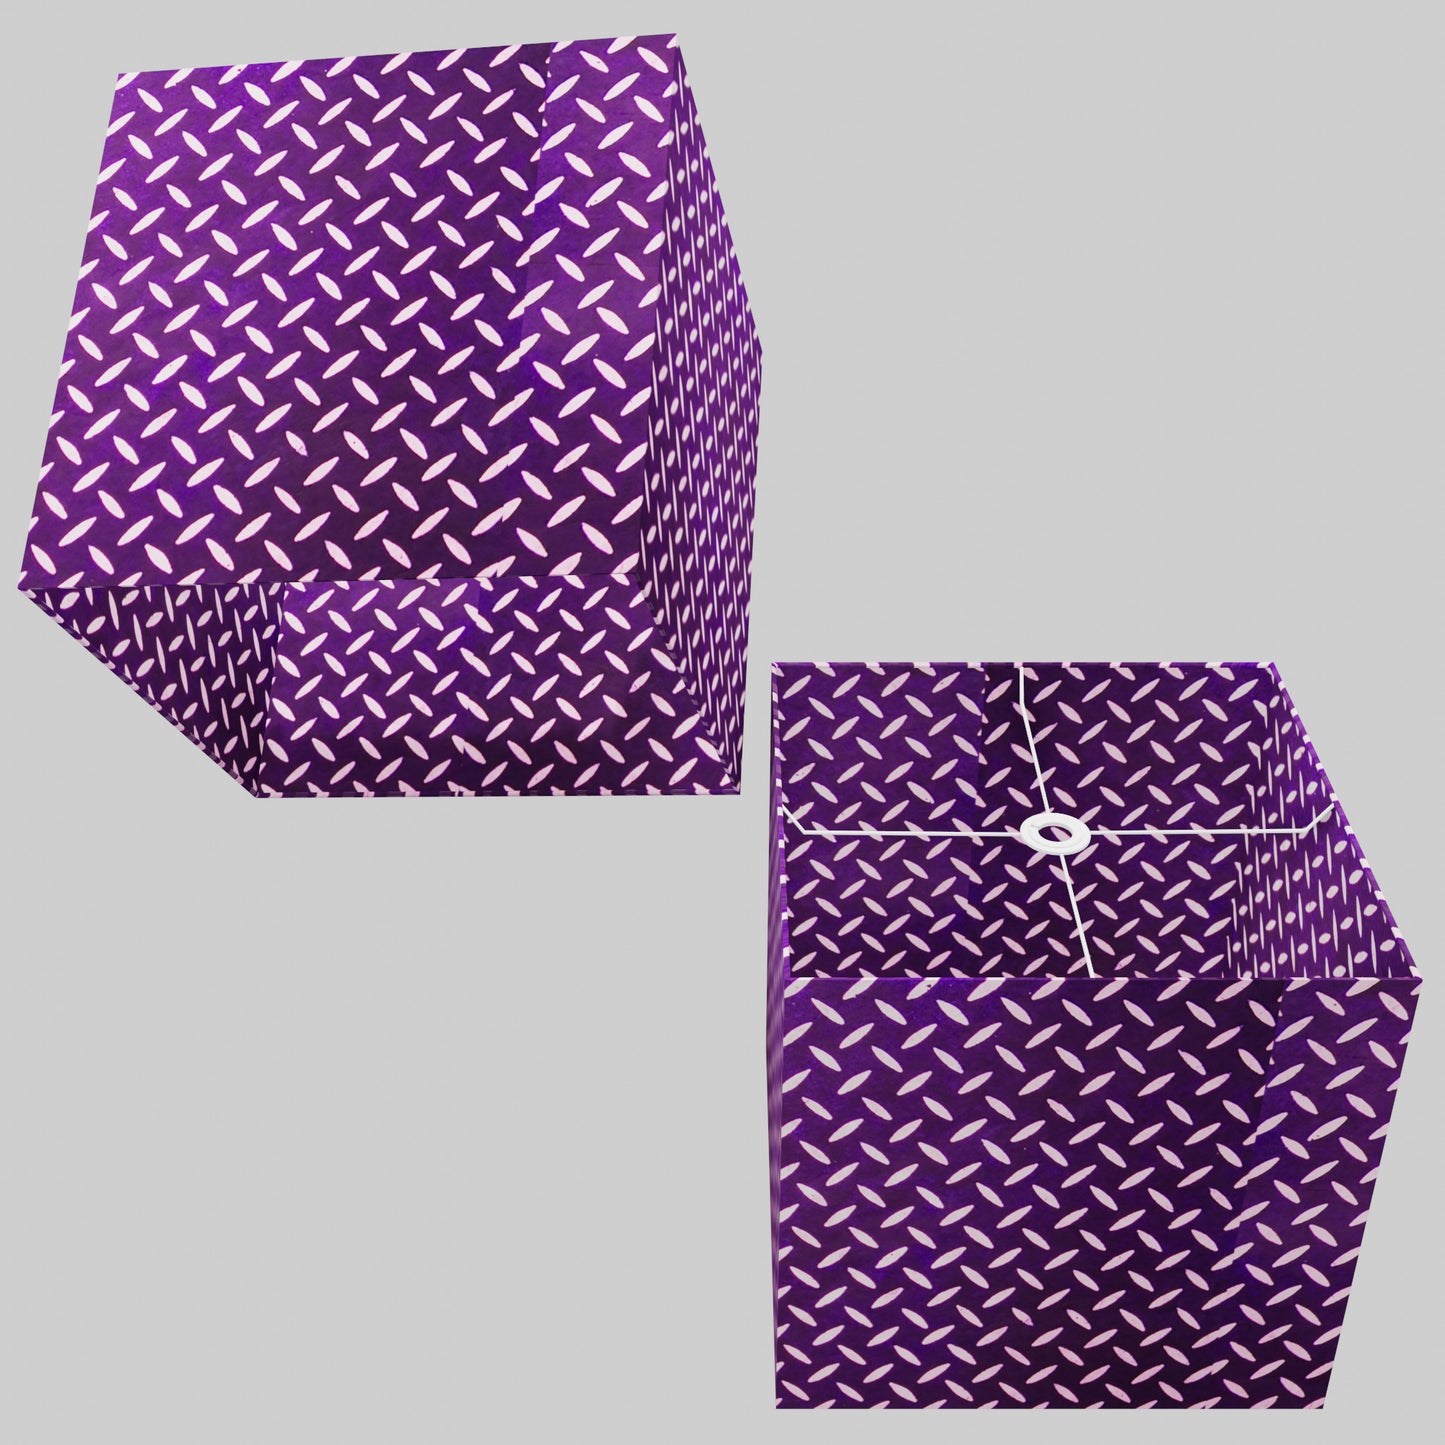 Square Lamp Shade - P13 - Batik Tread Plate Purple, 40cm(w) x 40cm(h) x 40cm(d)